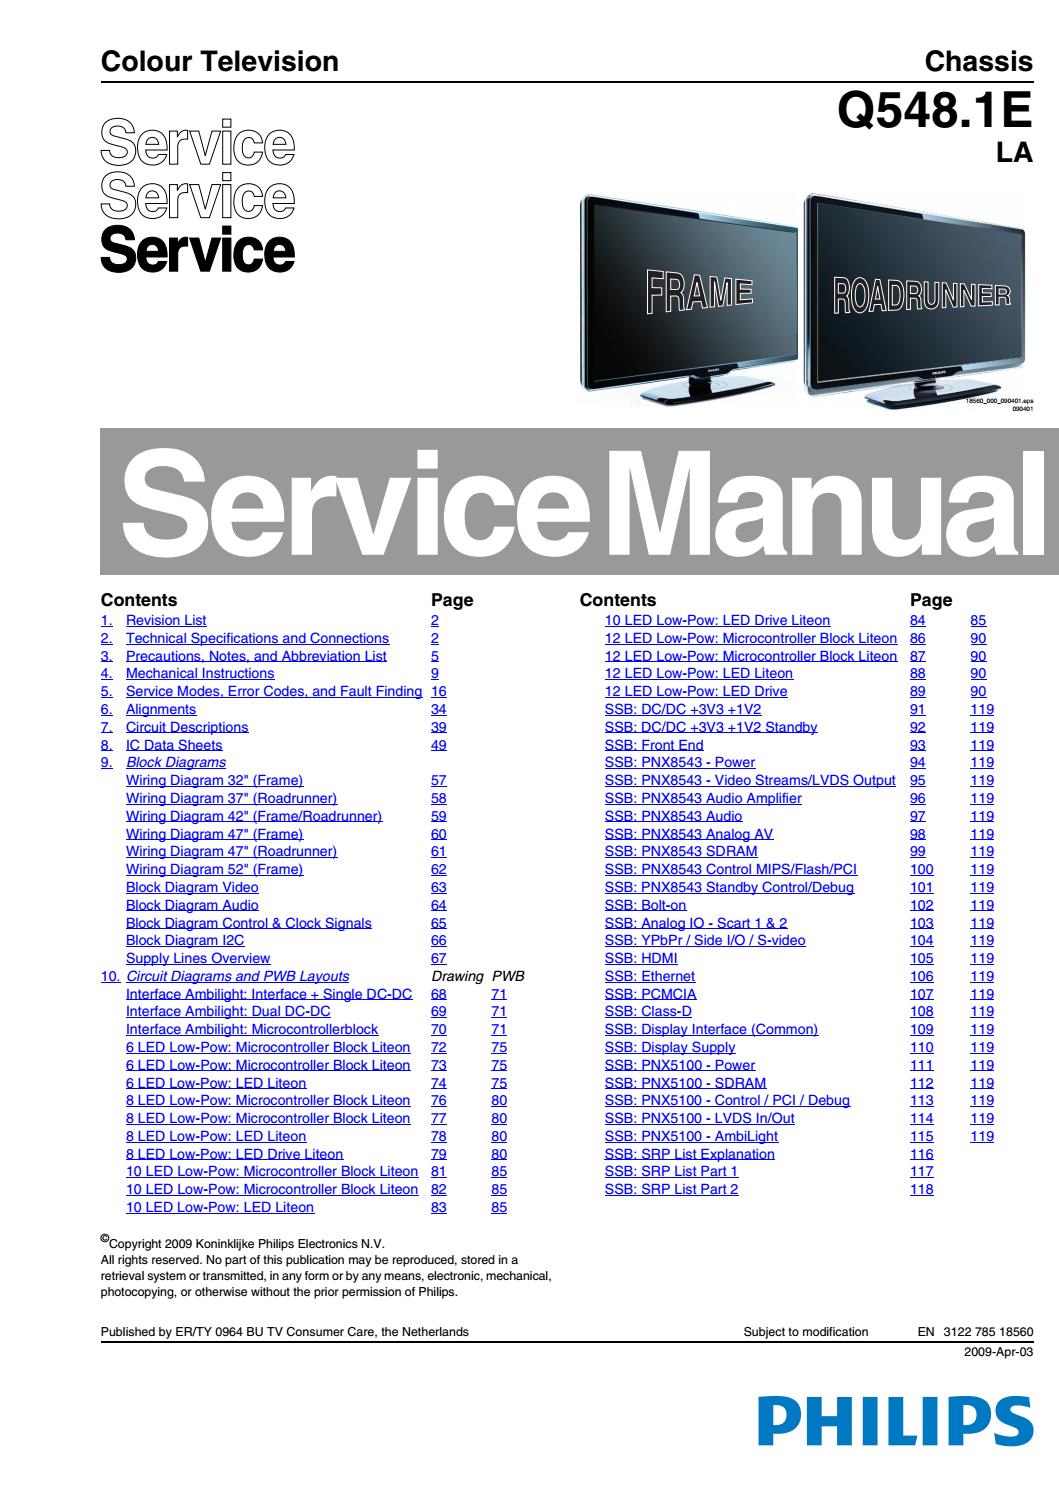 Philips user manual downloads